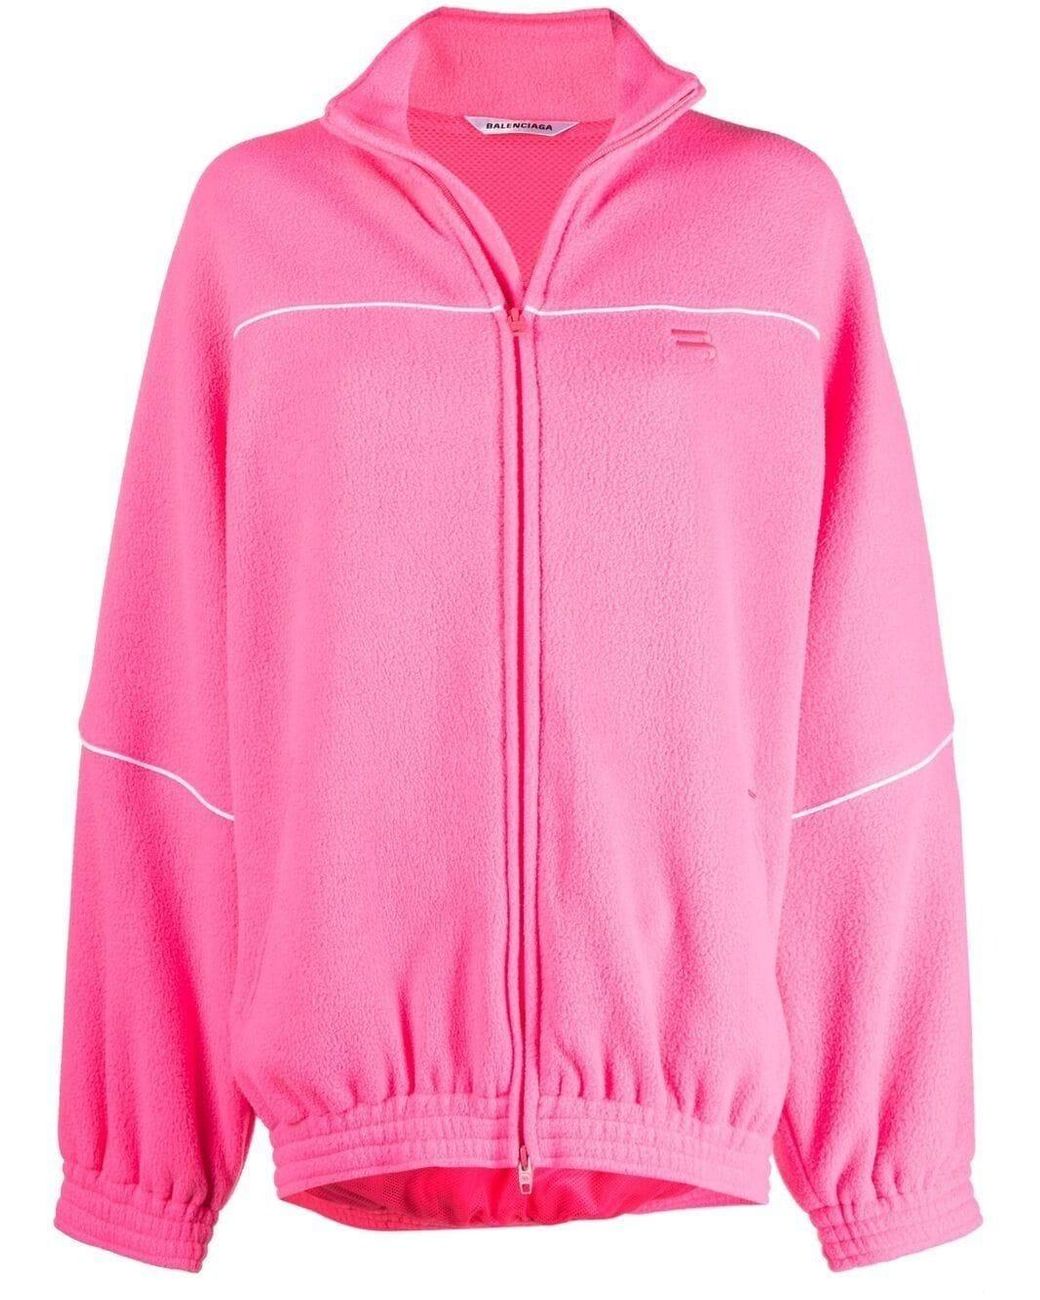 Balenciaga Tracksuit Jacket In Neon Pink Double Brushed Fleece - Lyst